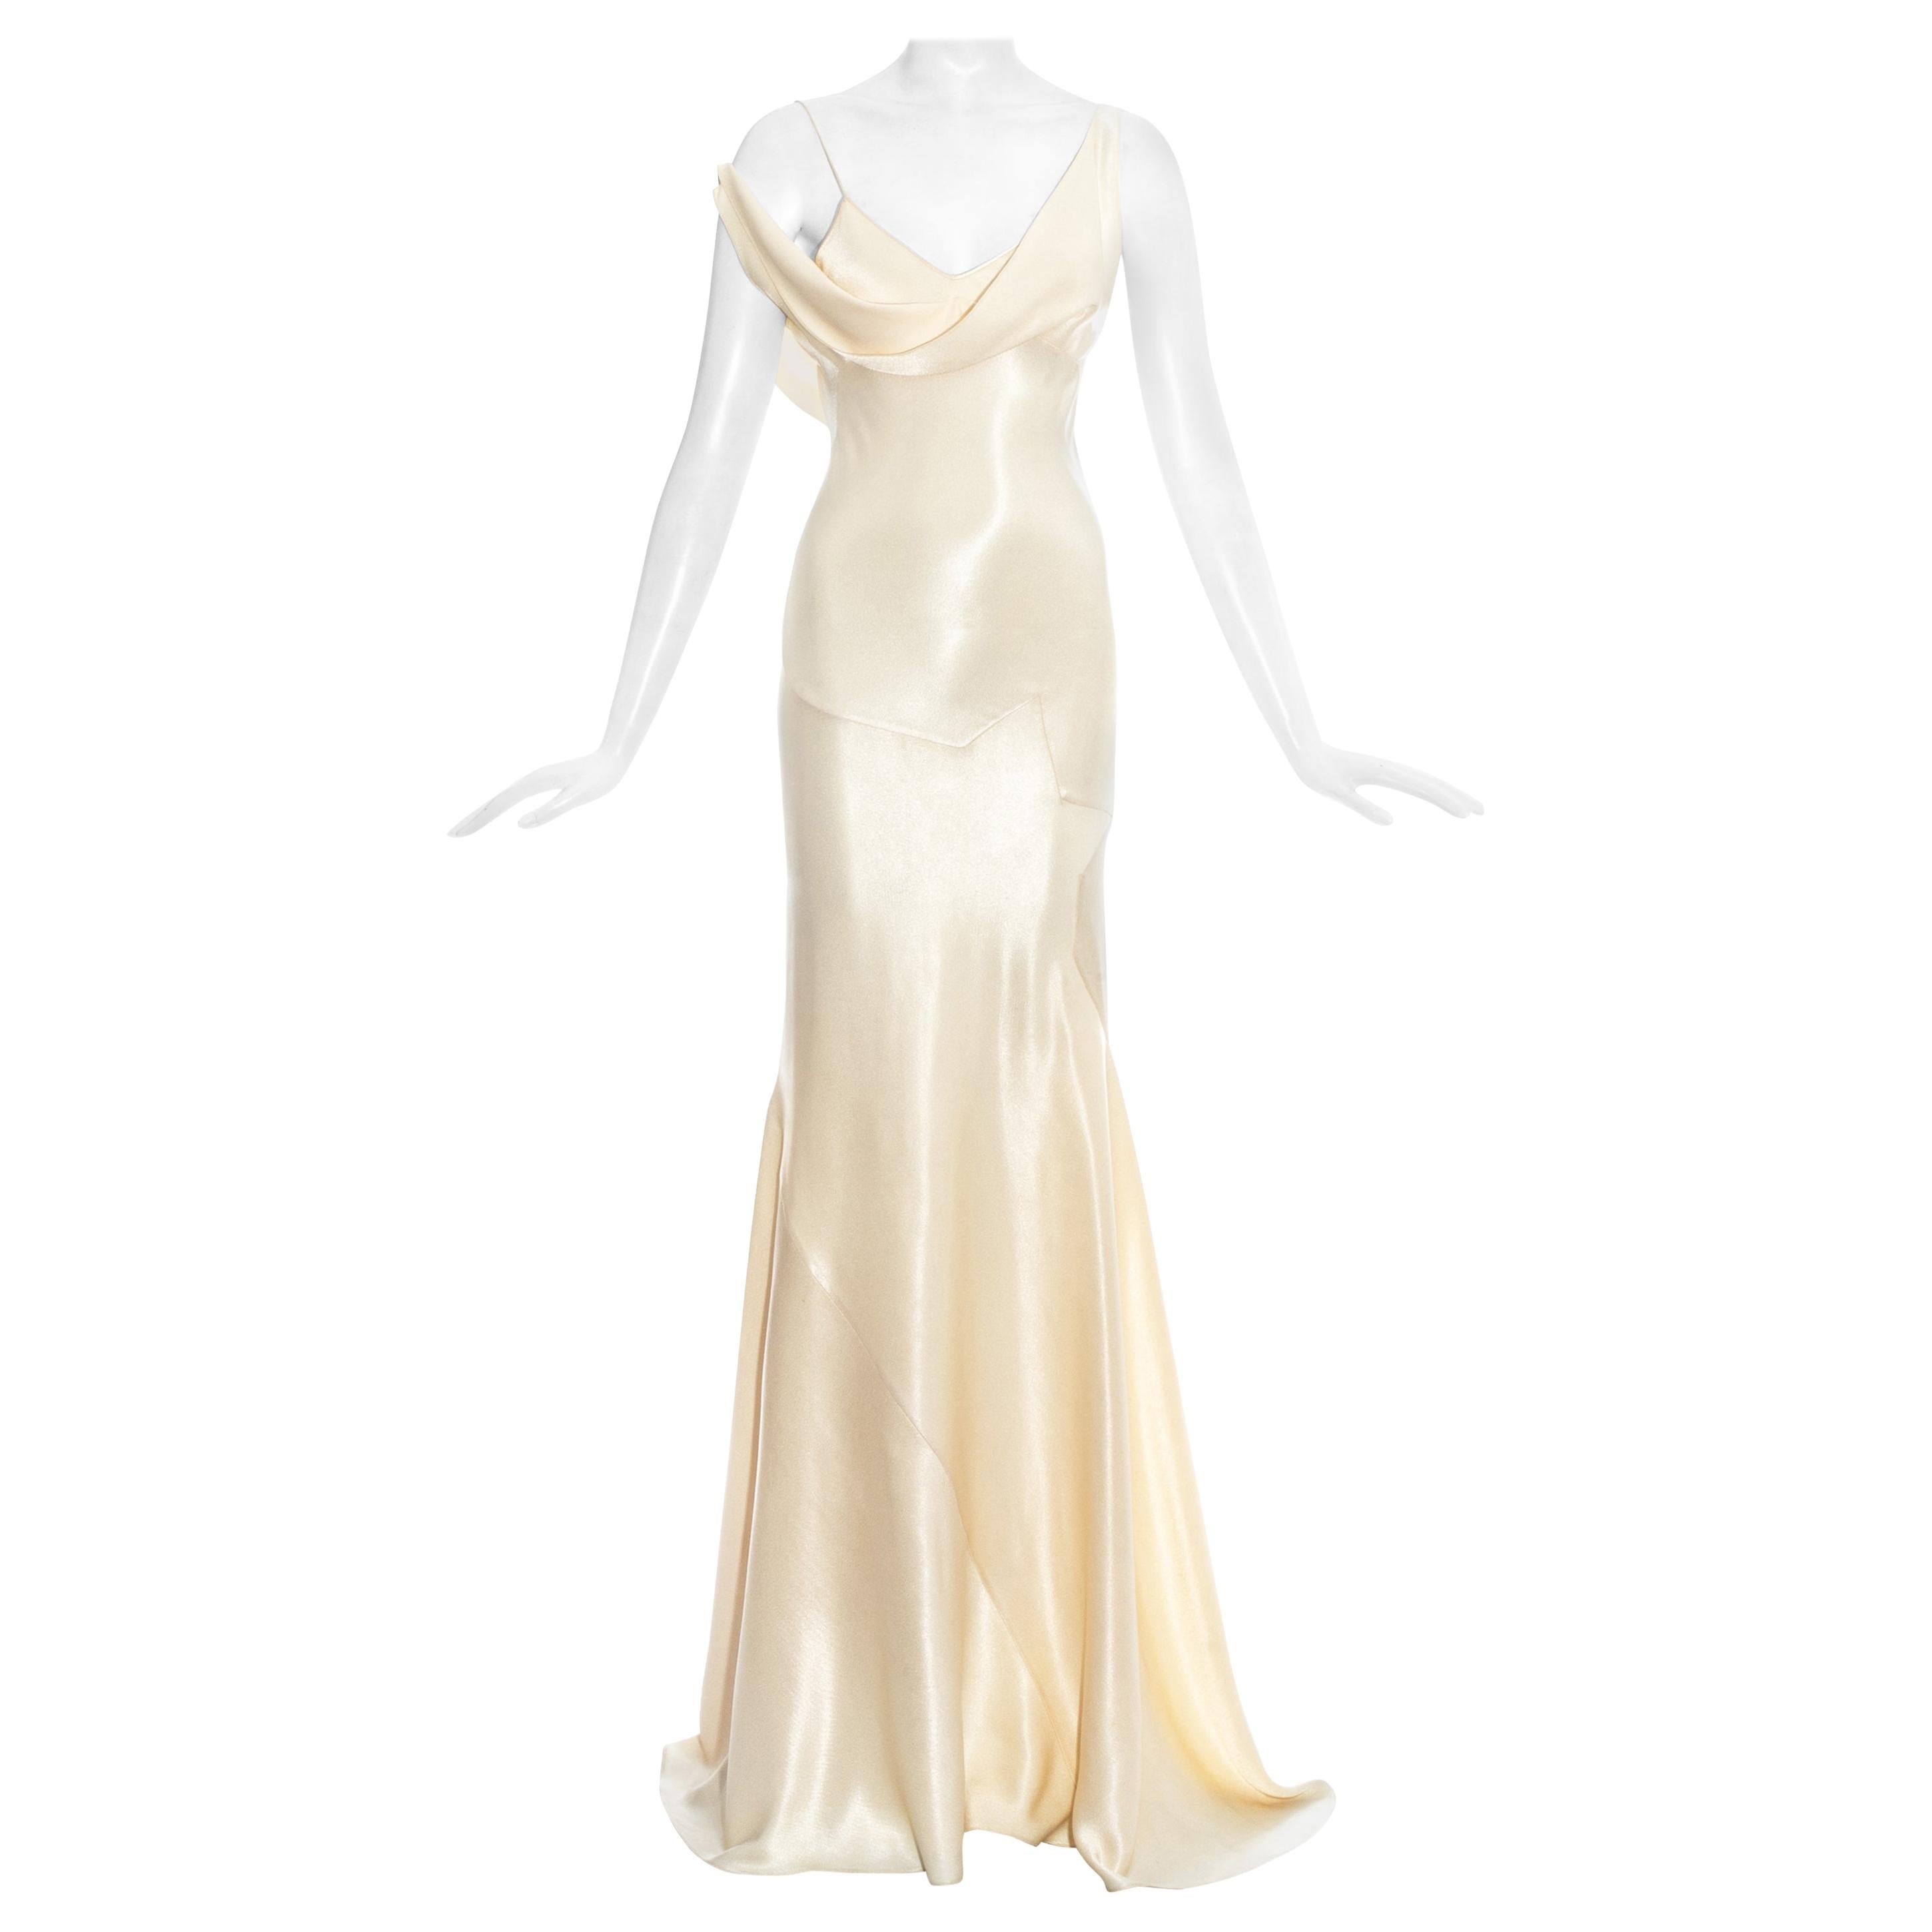 John Galliano champagne bias cut wedding dress, ss 1995 For Sale